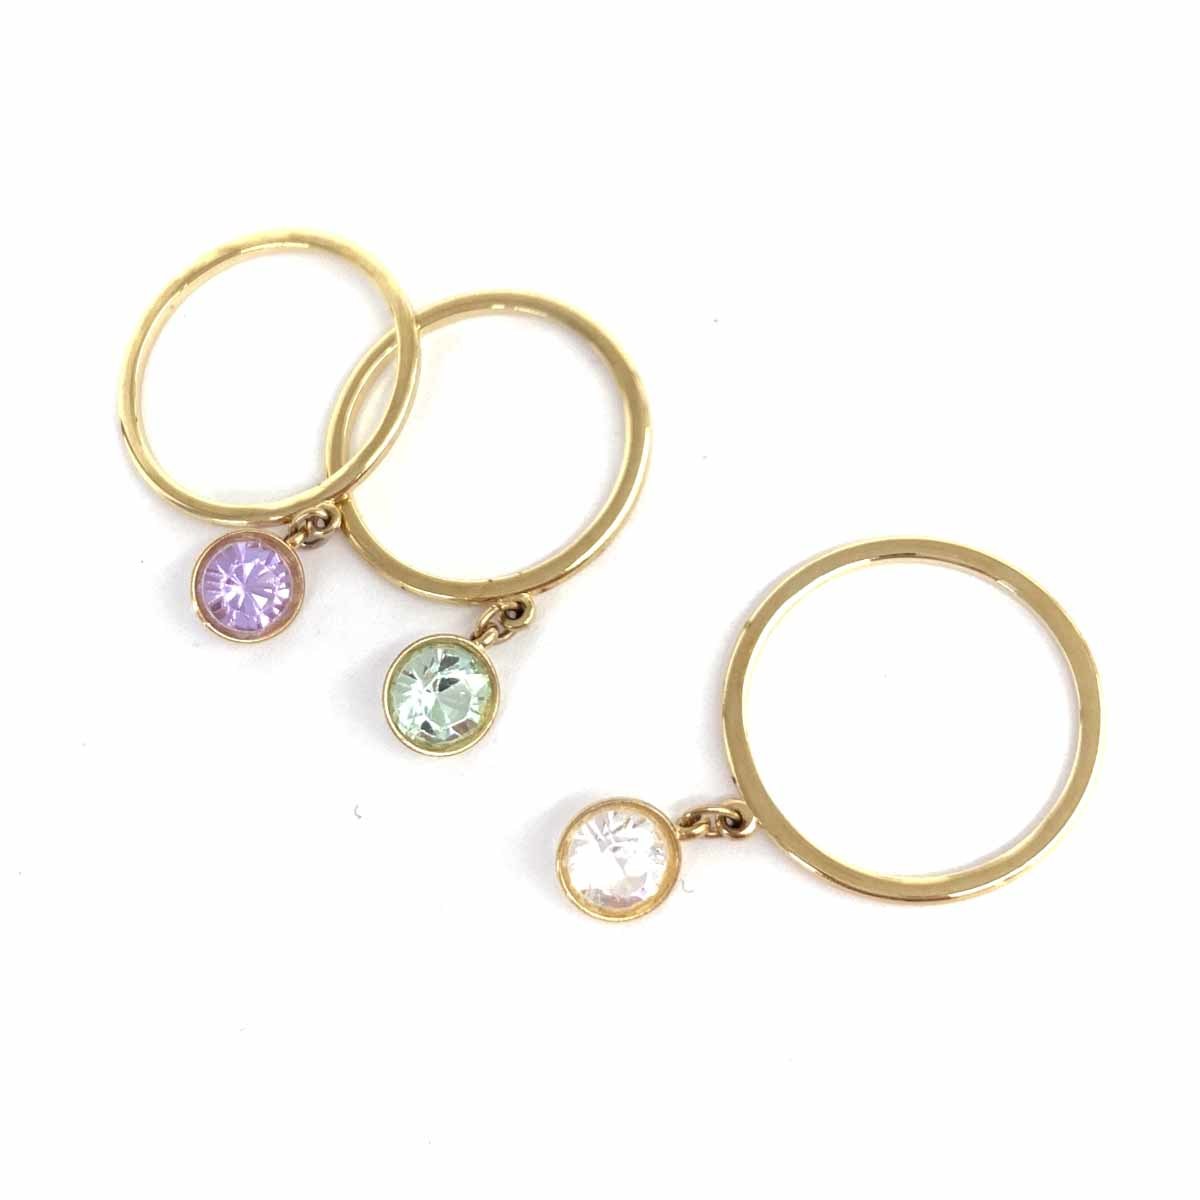 *SWAROVSKI Swarovski 3 ream ring * Gold color one bead color stone lady's ring ring accessory accessory 